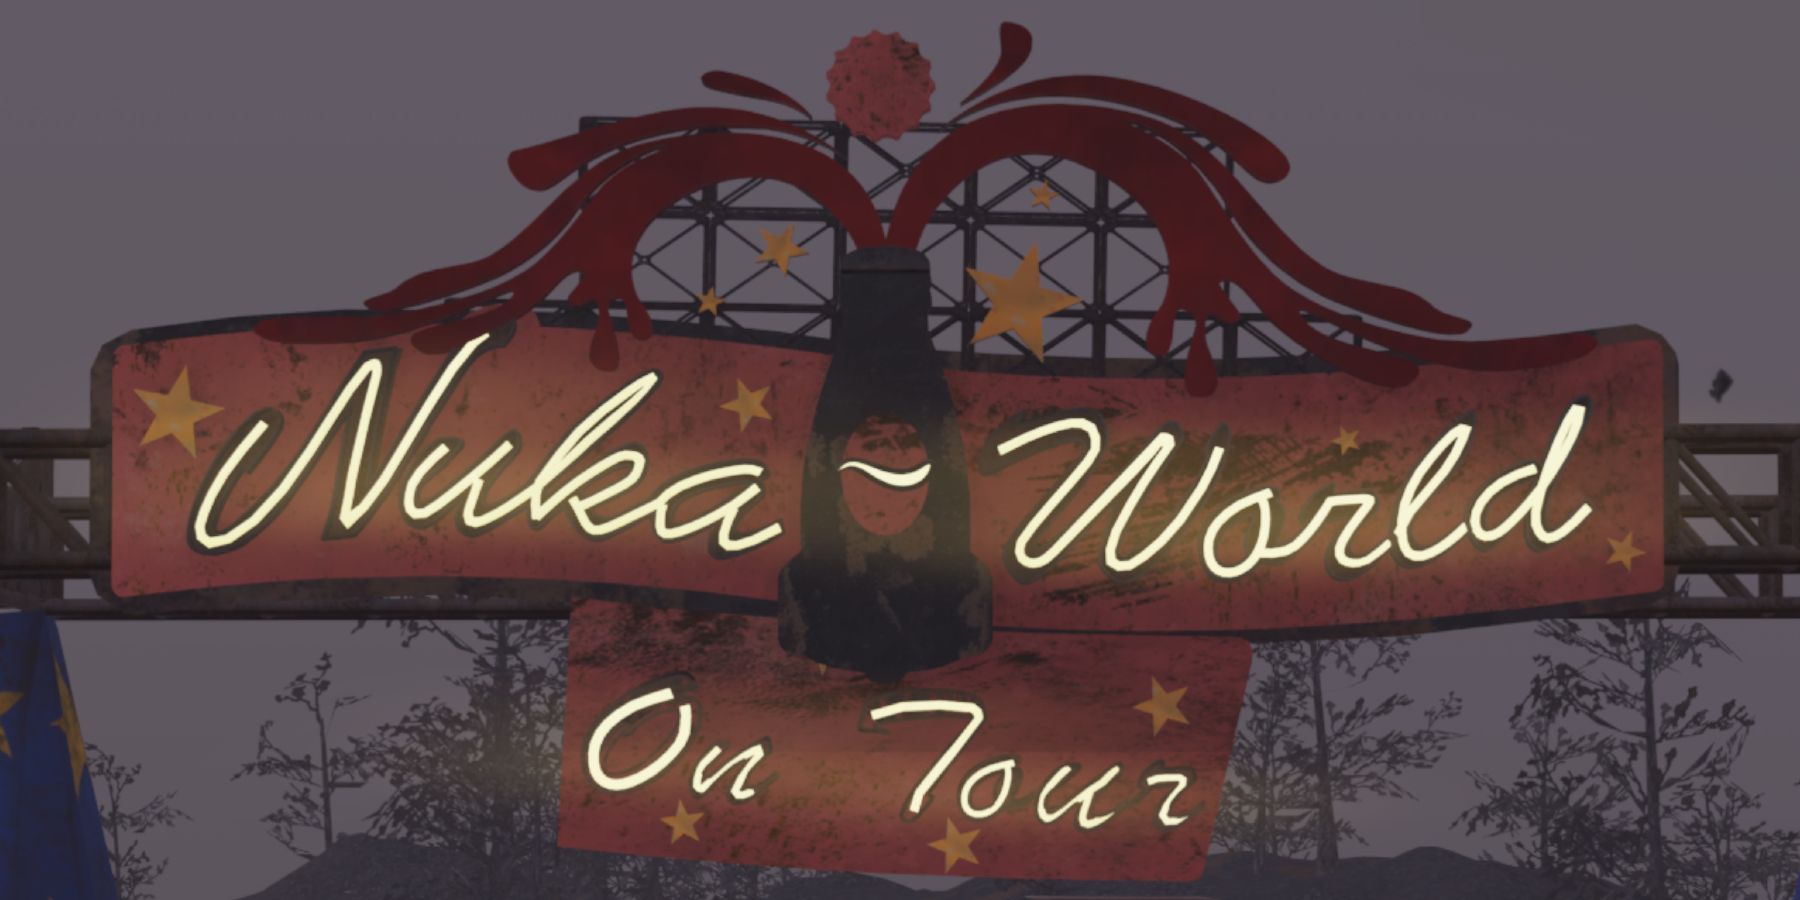 Fallout 76 Nuka World On Tour Neon Sign at Nuka-World